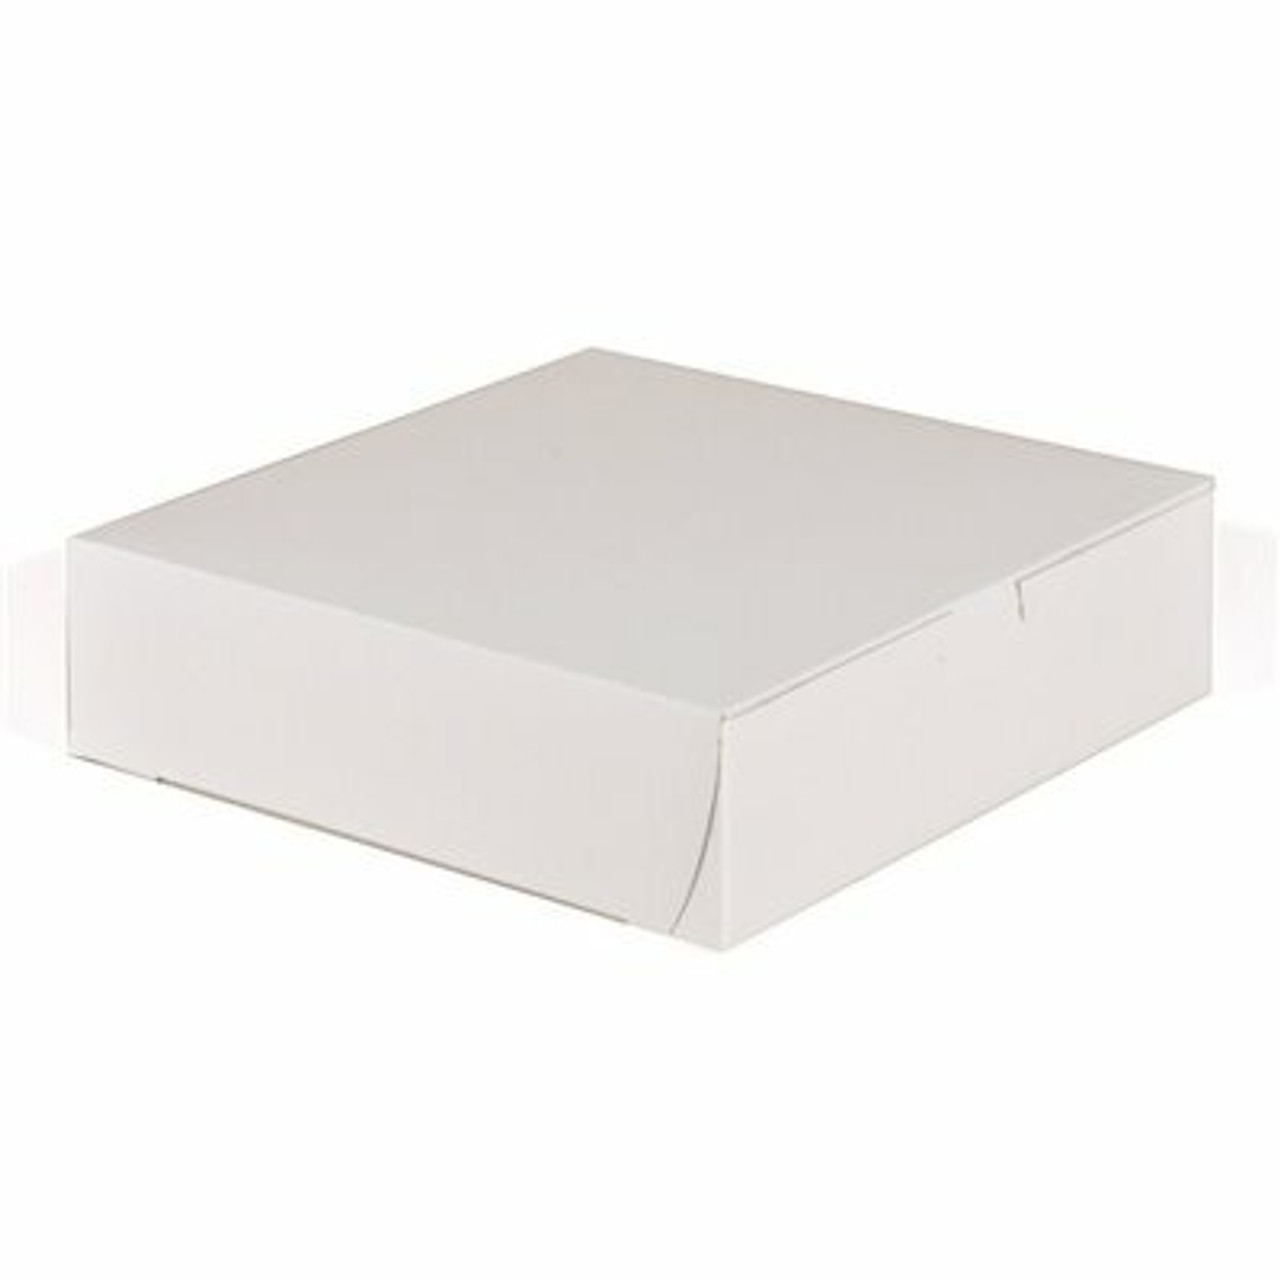 Southern Champion Tray White Non-Window Bakery Box 9 X 9 X 2-1/2" (250 Per Case)